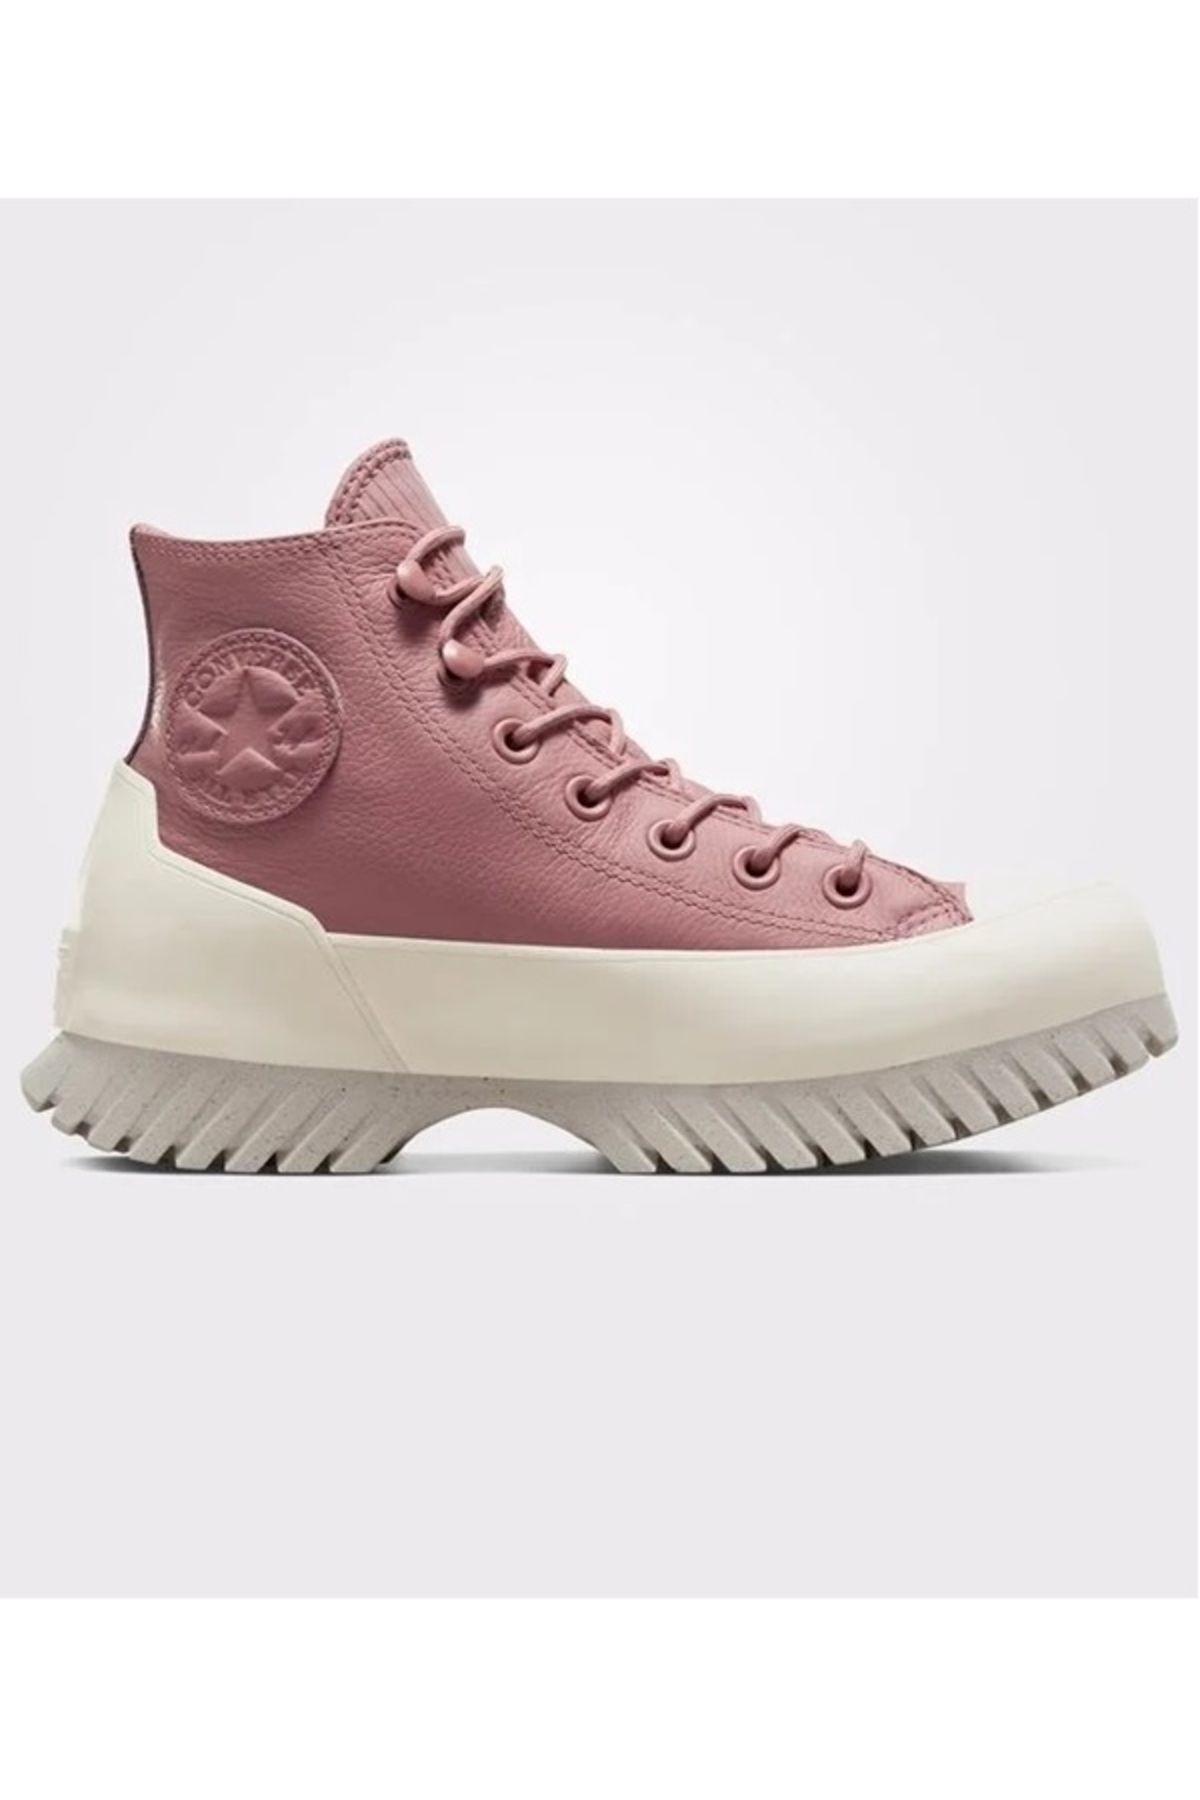 Converse Chuck Taylor All Star Mixed Material Kadın Sneaker Ayakkabı